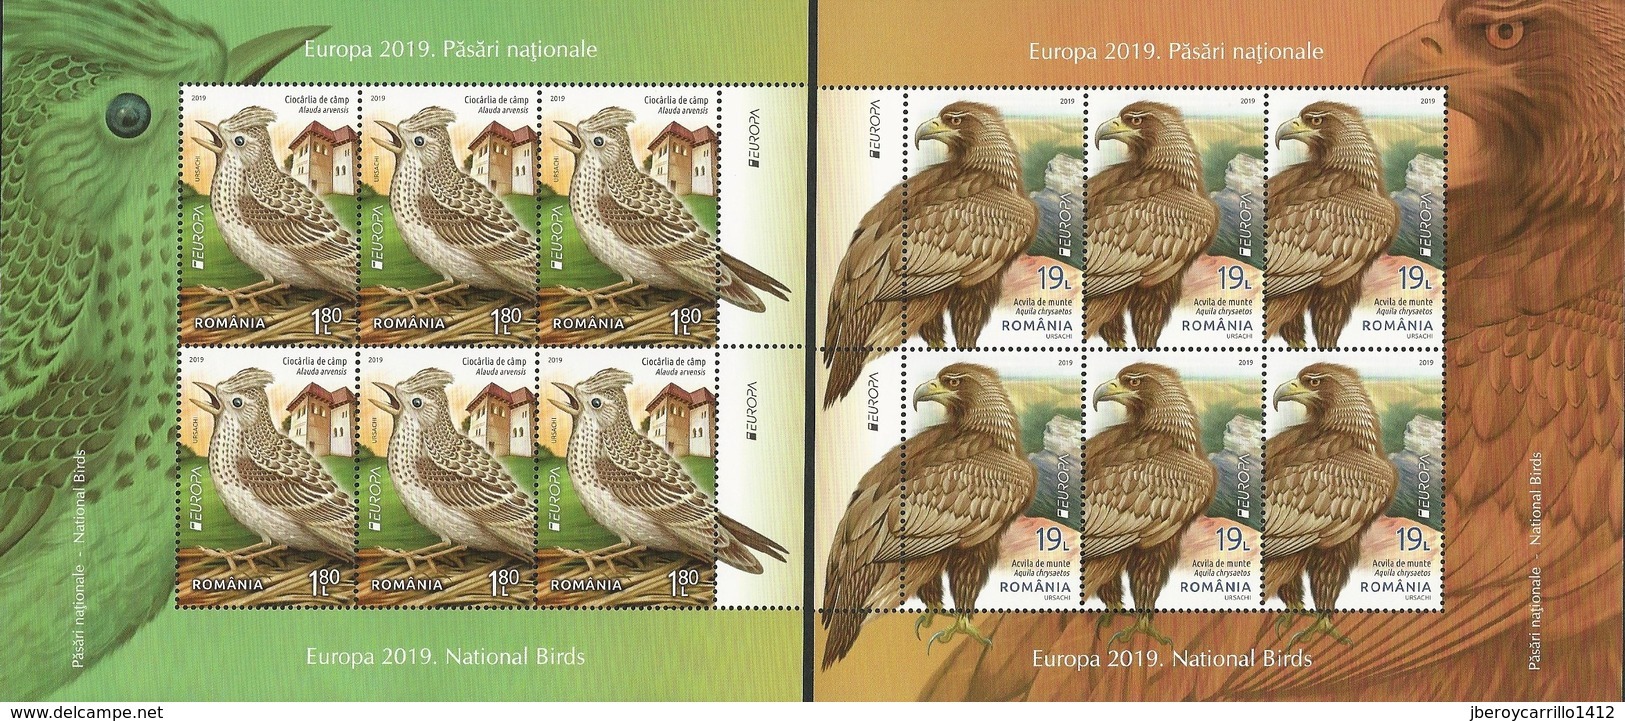 RUMANIA /ROMANIA /RUMÄNIEN -EUROPA 2019 -NATIONAL BIRDS.-"AVES -BIRDS -VÖGEL -OISEAUX"-TWO SHEET Of 6 Stamps - 2019